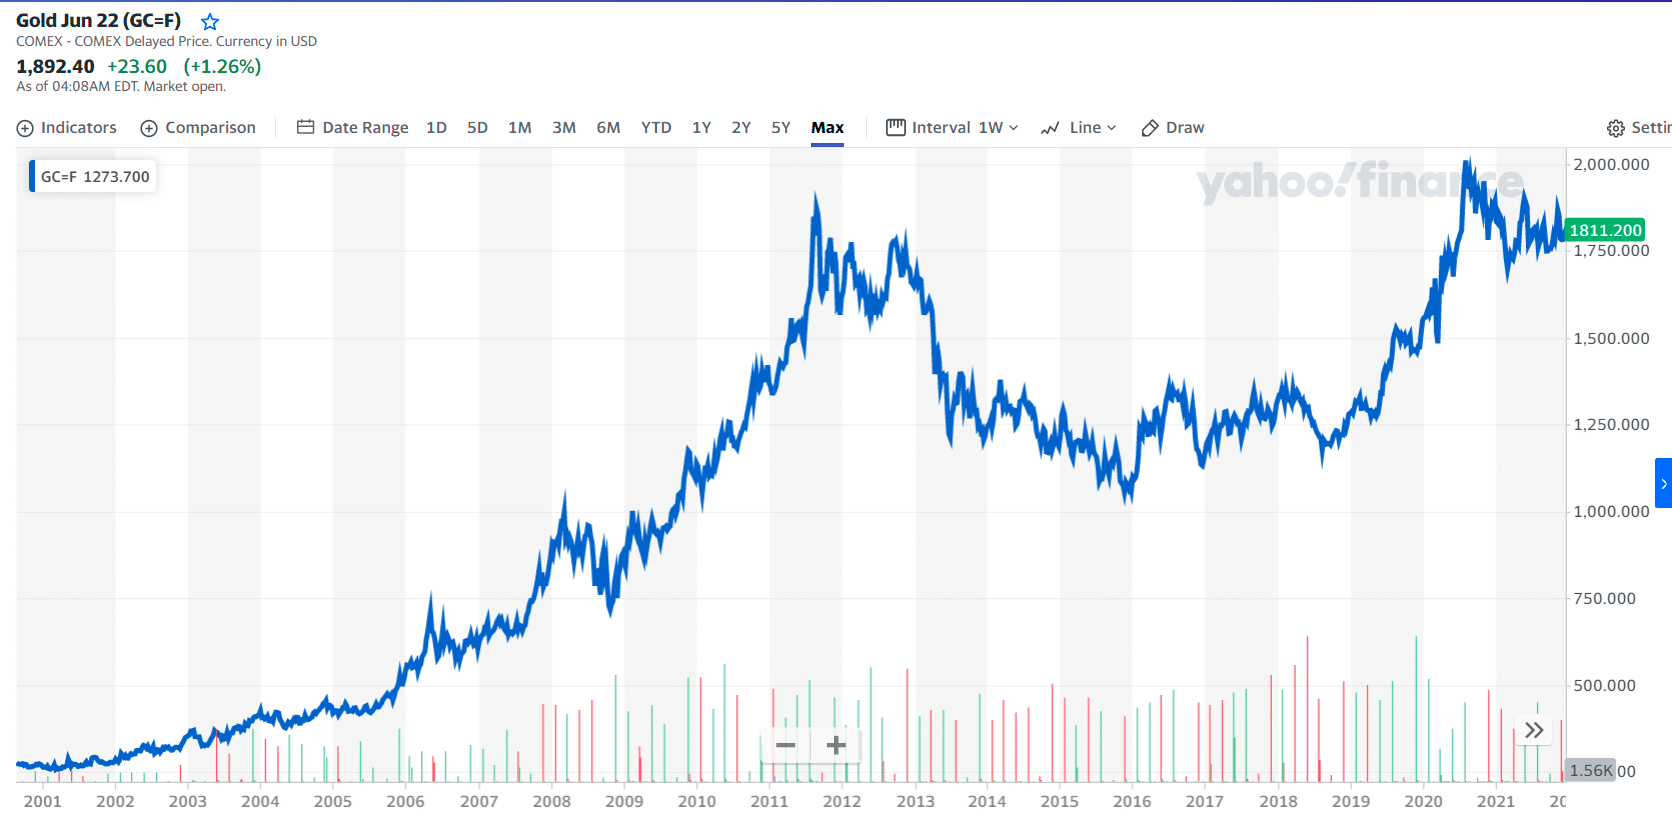 Gold price chart